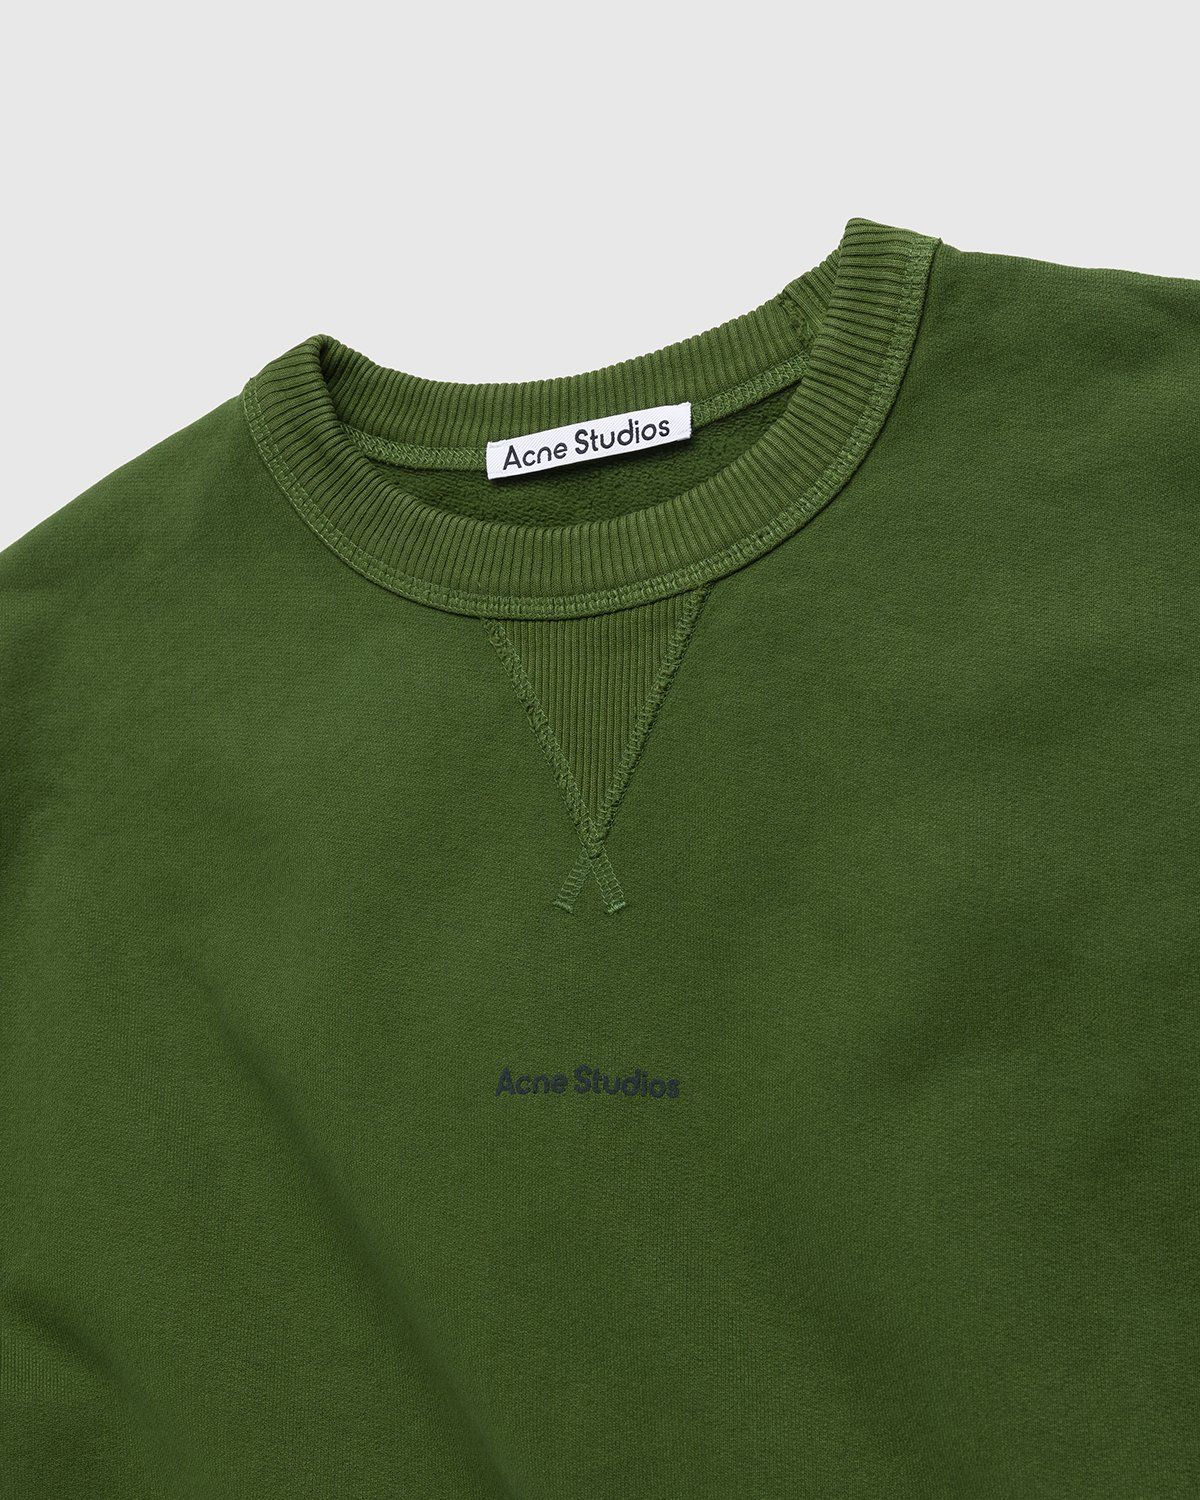 Acne Studios – Organic Cotton Crewneck Sweatshirt Bottle Green - Sweatshirts - Green - Image 4